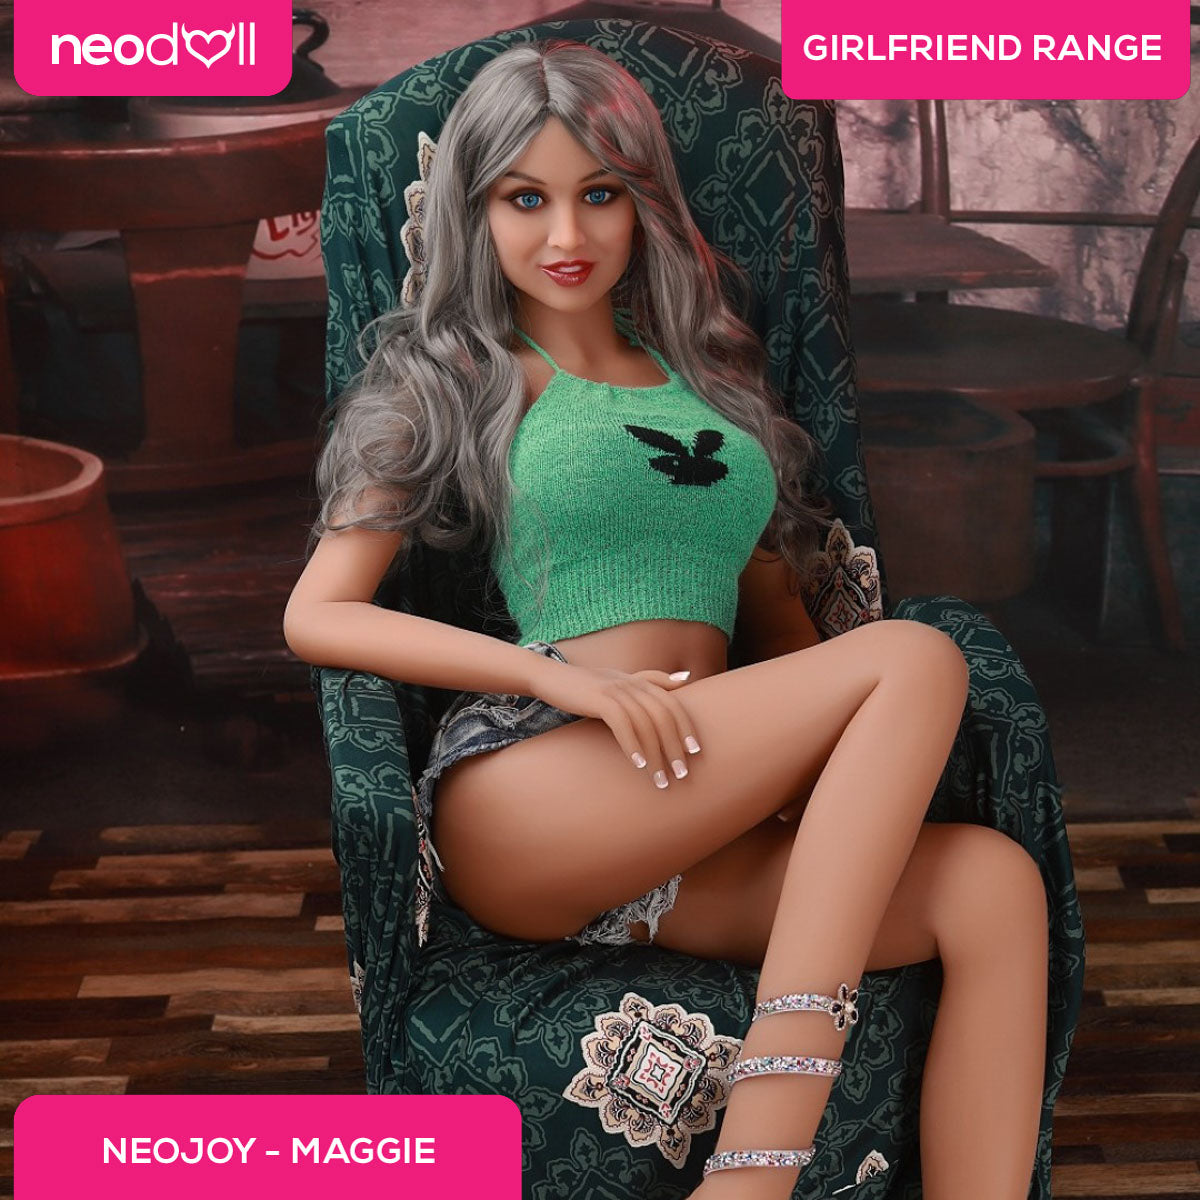 Neodoll Girlfriend Maggie - Realistic Sex Doll - 166cm - Tan